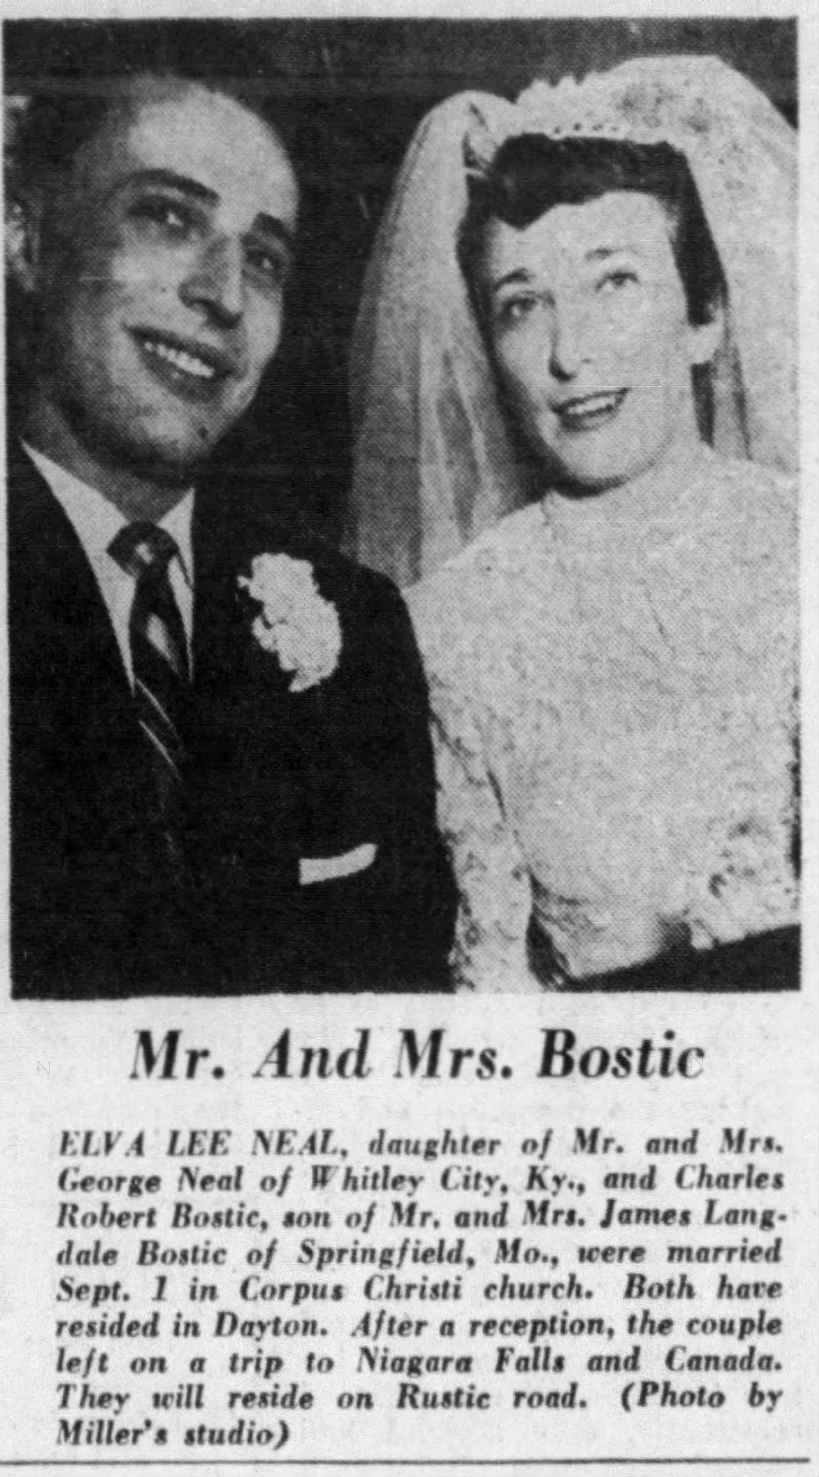 Mr & Mrs Charles Robert Bostic